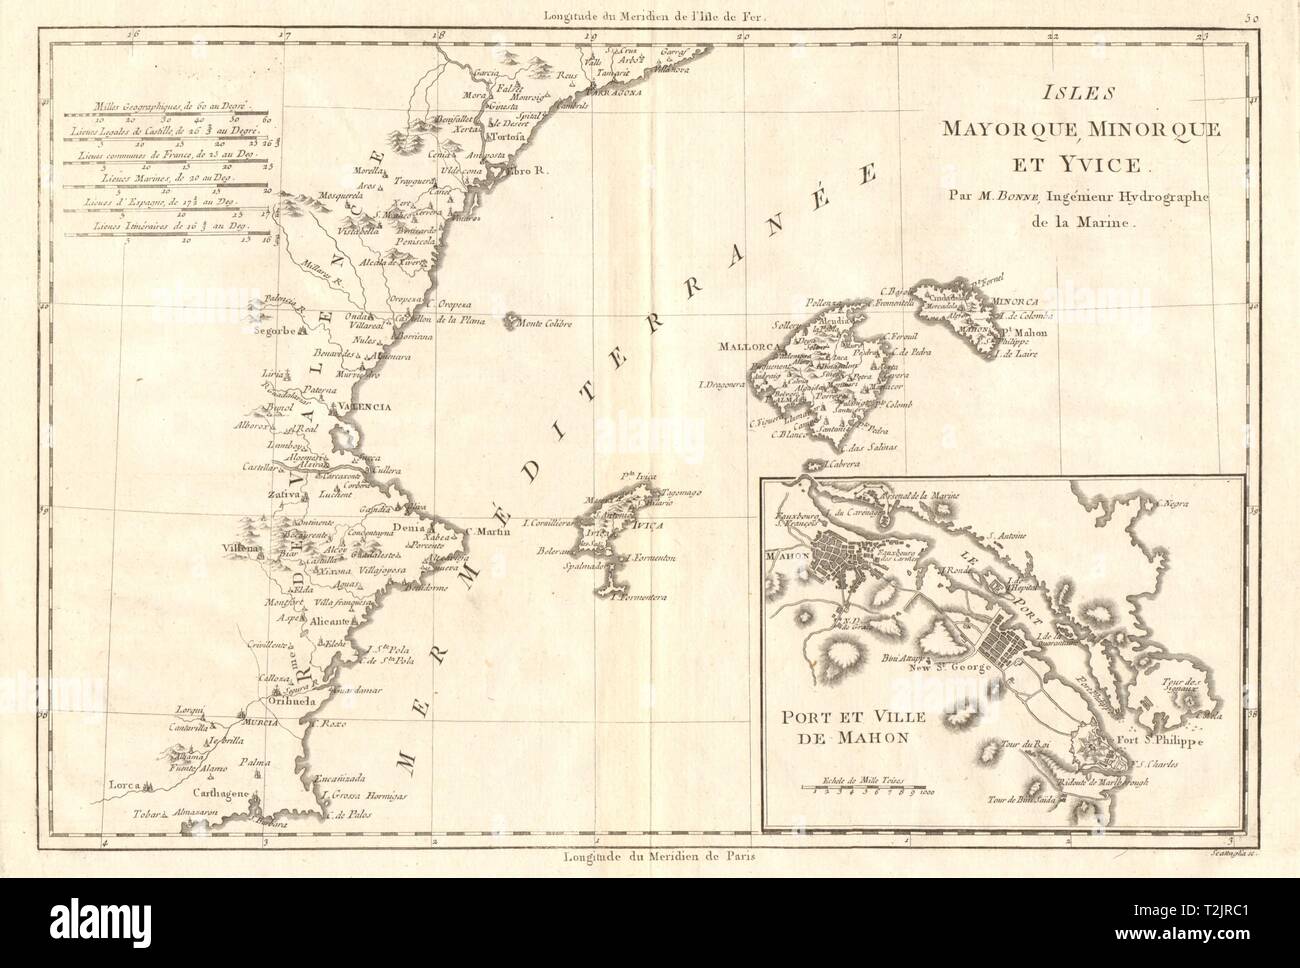 Iles Mayorque, Minorque et Yvice. Mahon. Majorca Menorca Ibiza. BONNE 1789 map Stock Photo